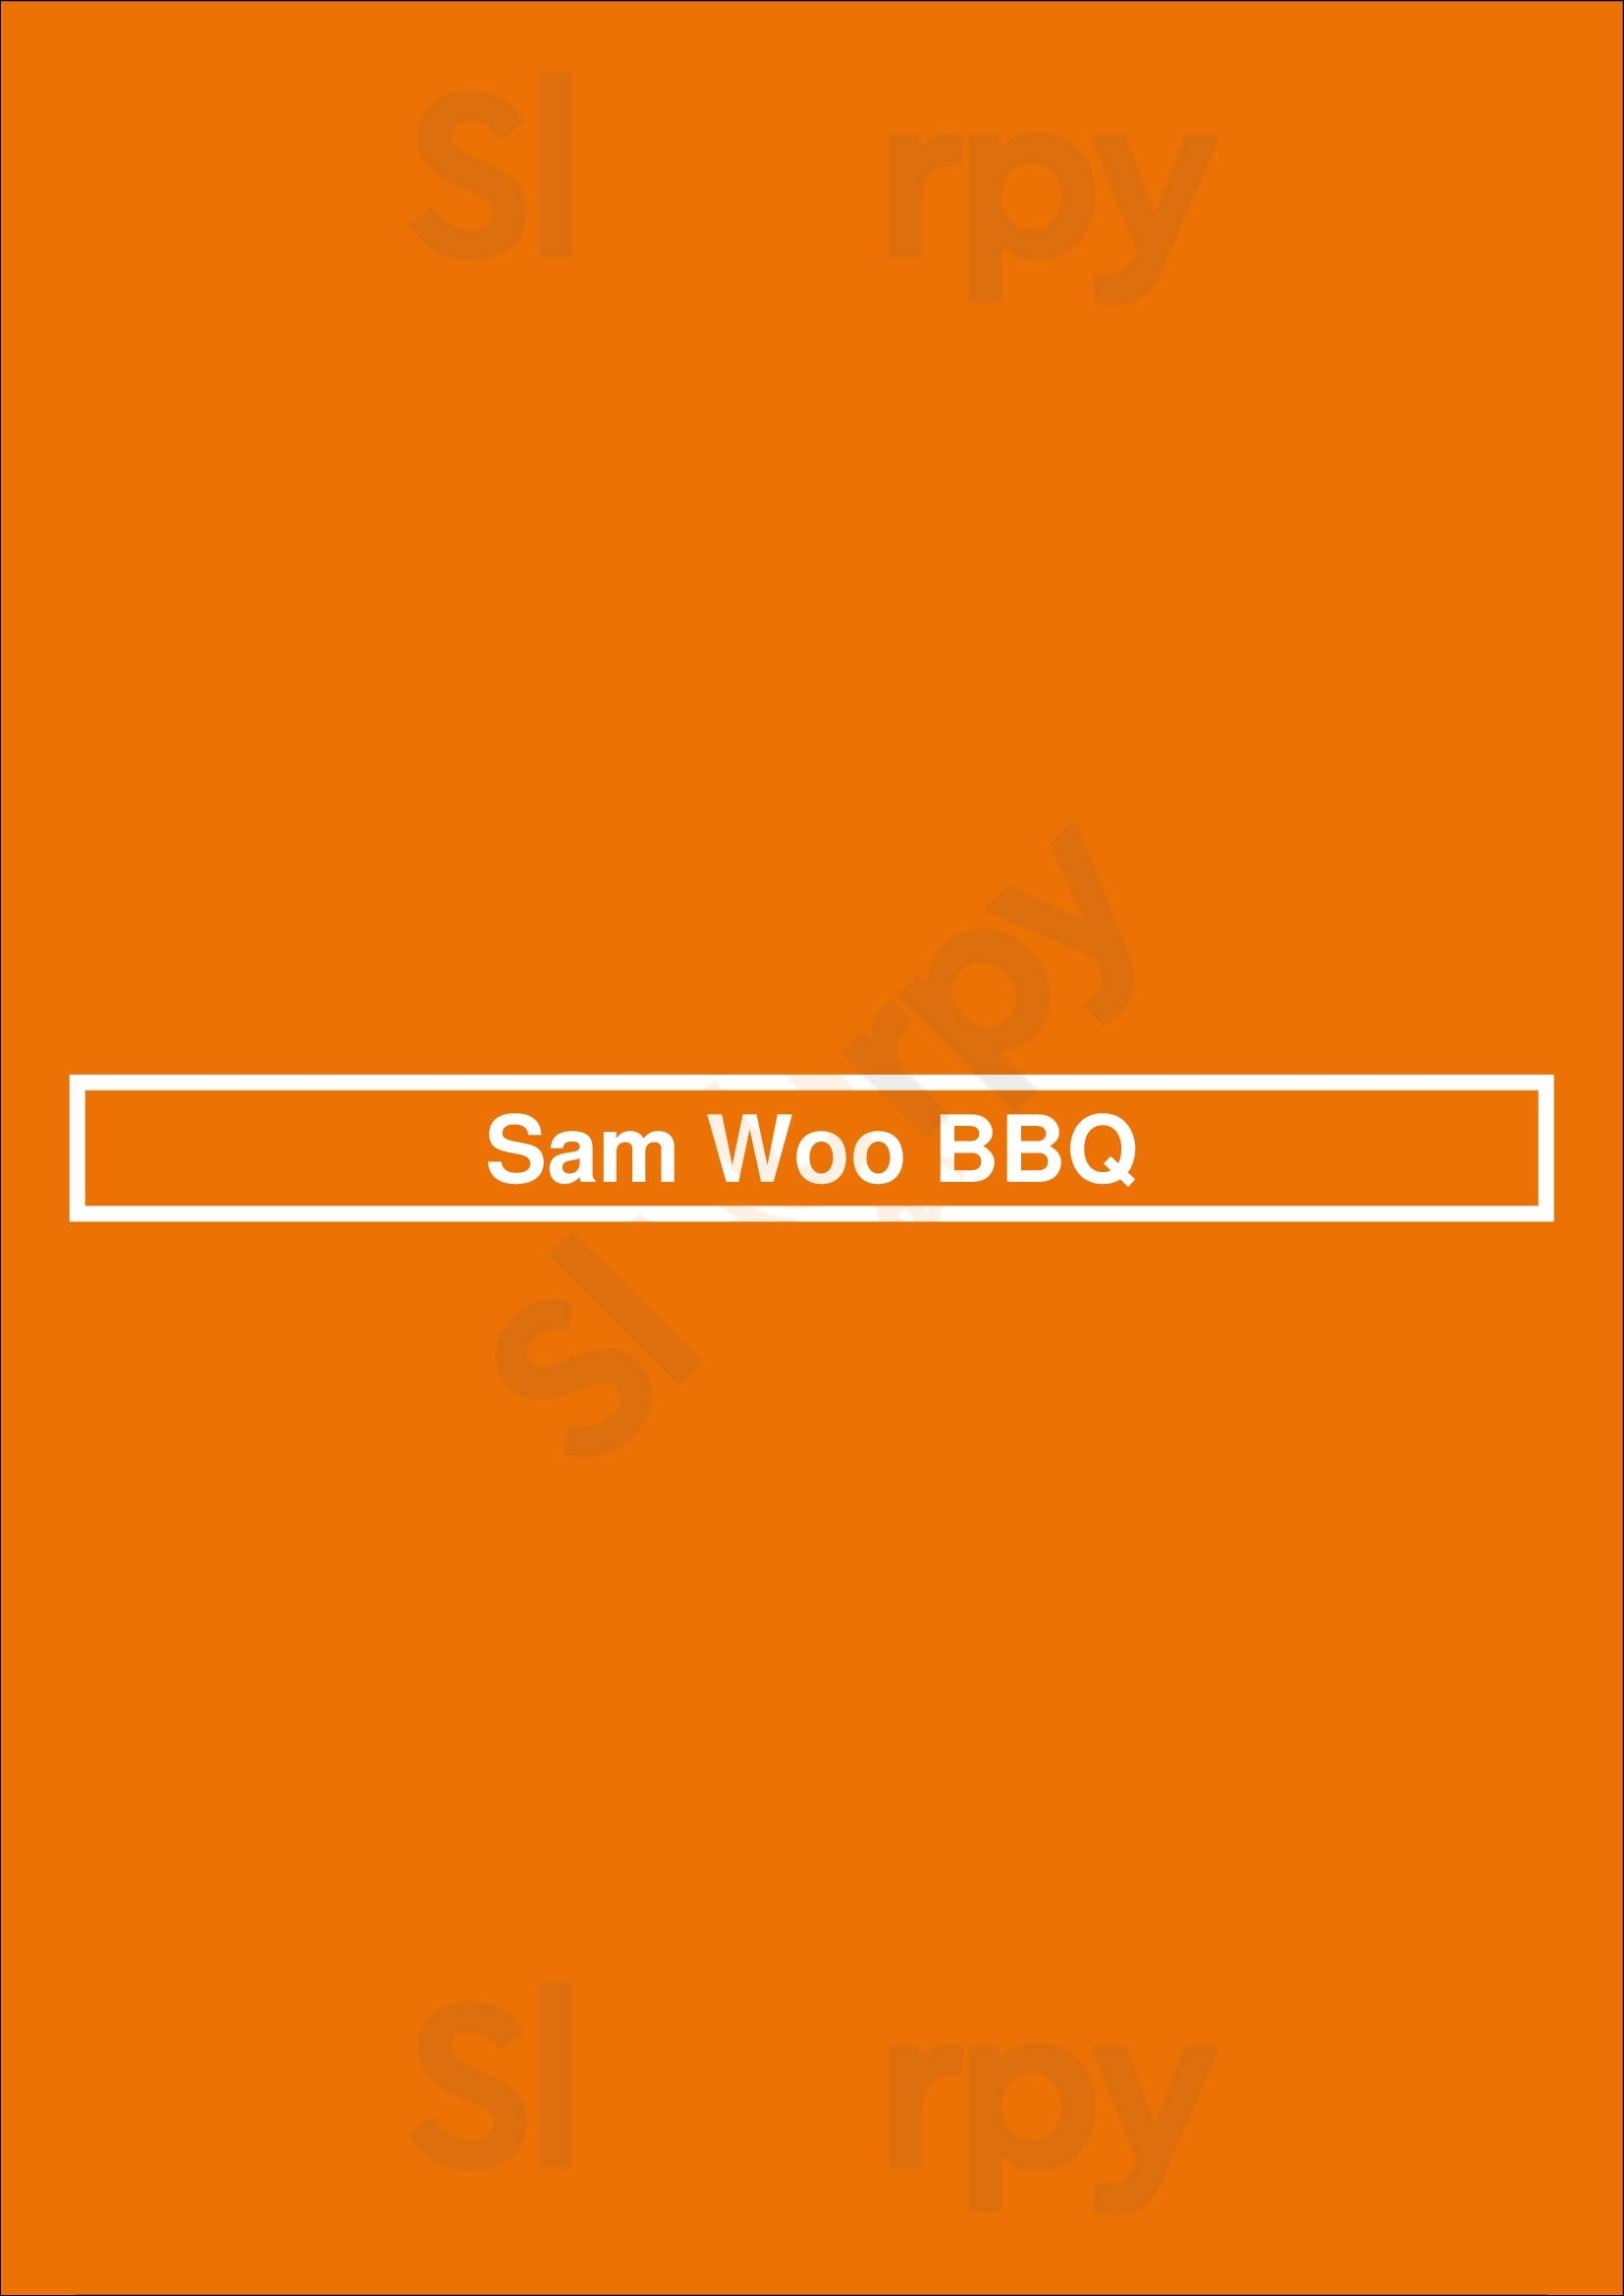 Sam Woo Bbq Las Vegas Menu - 1